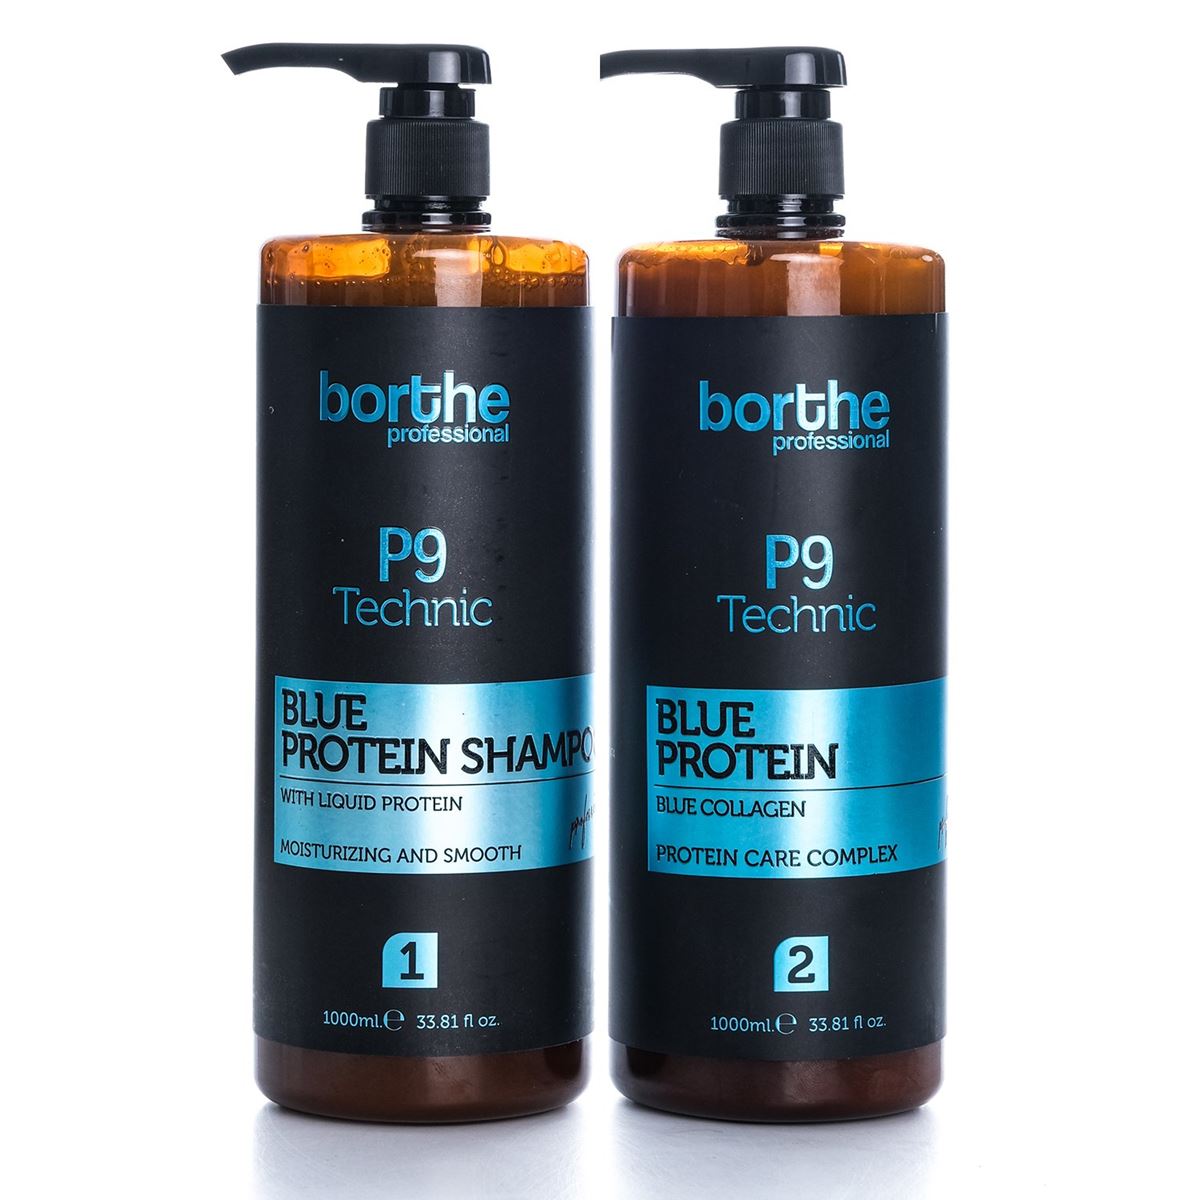 Borthe P9 Technic Blue Protein Shampoo No:1 1000ml